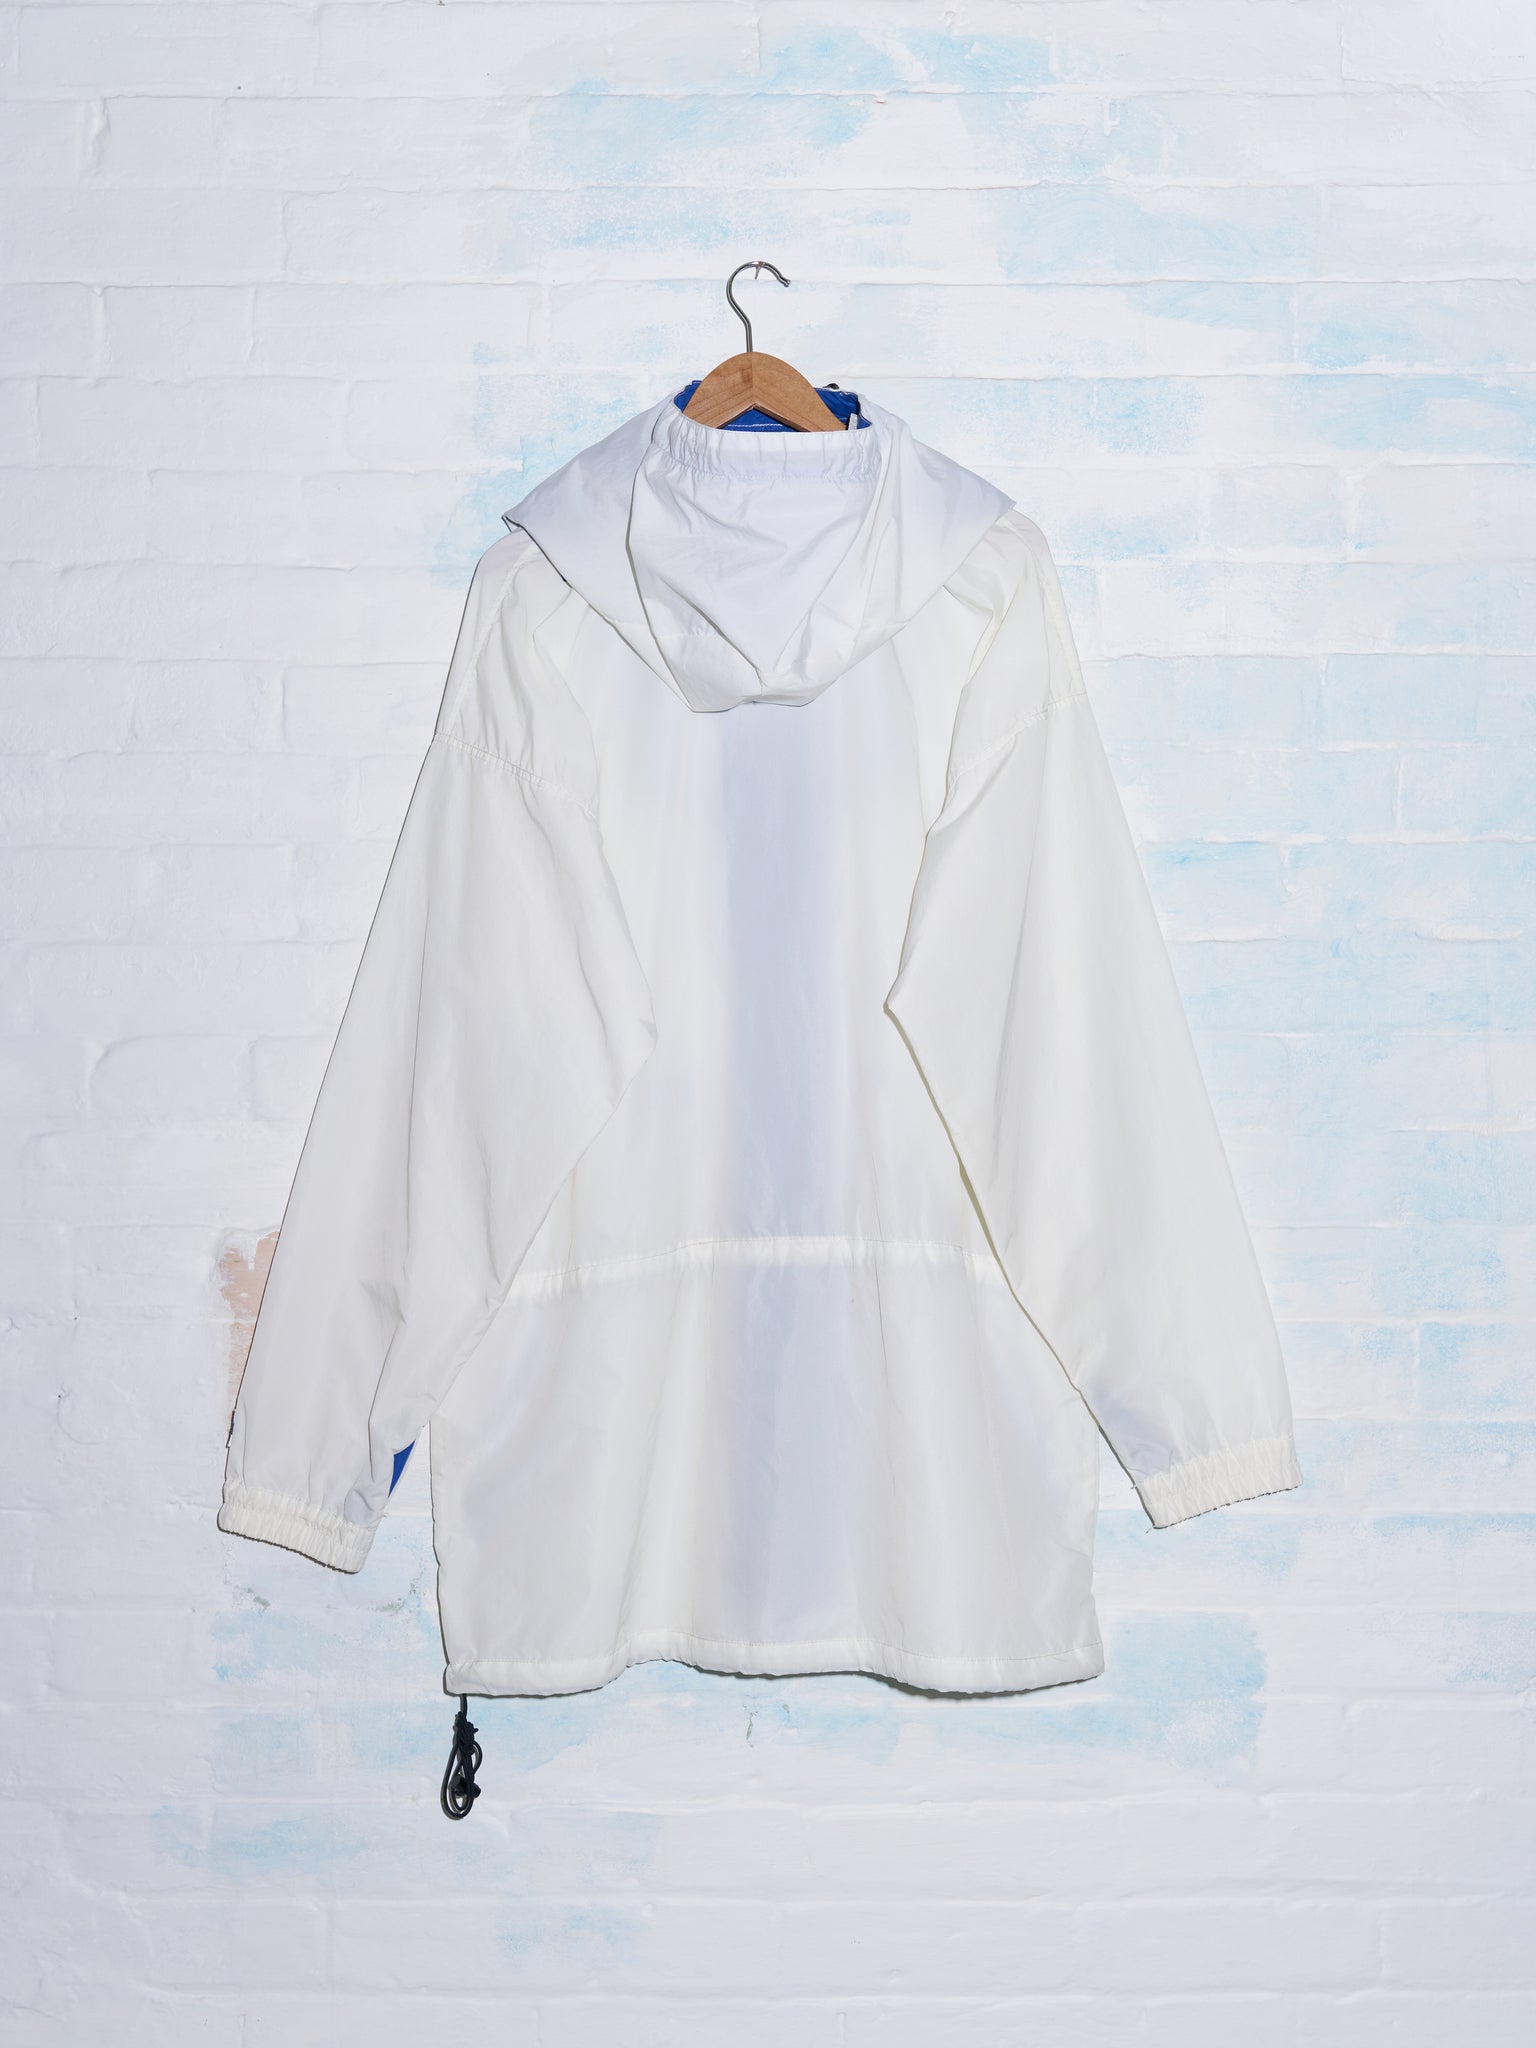 Sierra Designs 1990s white nylon 4 pocket parka with pullover hood - XL